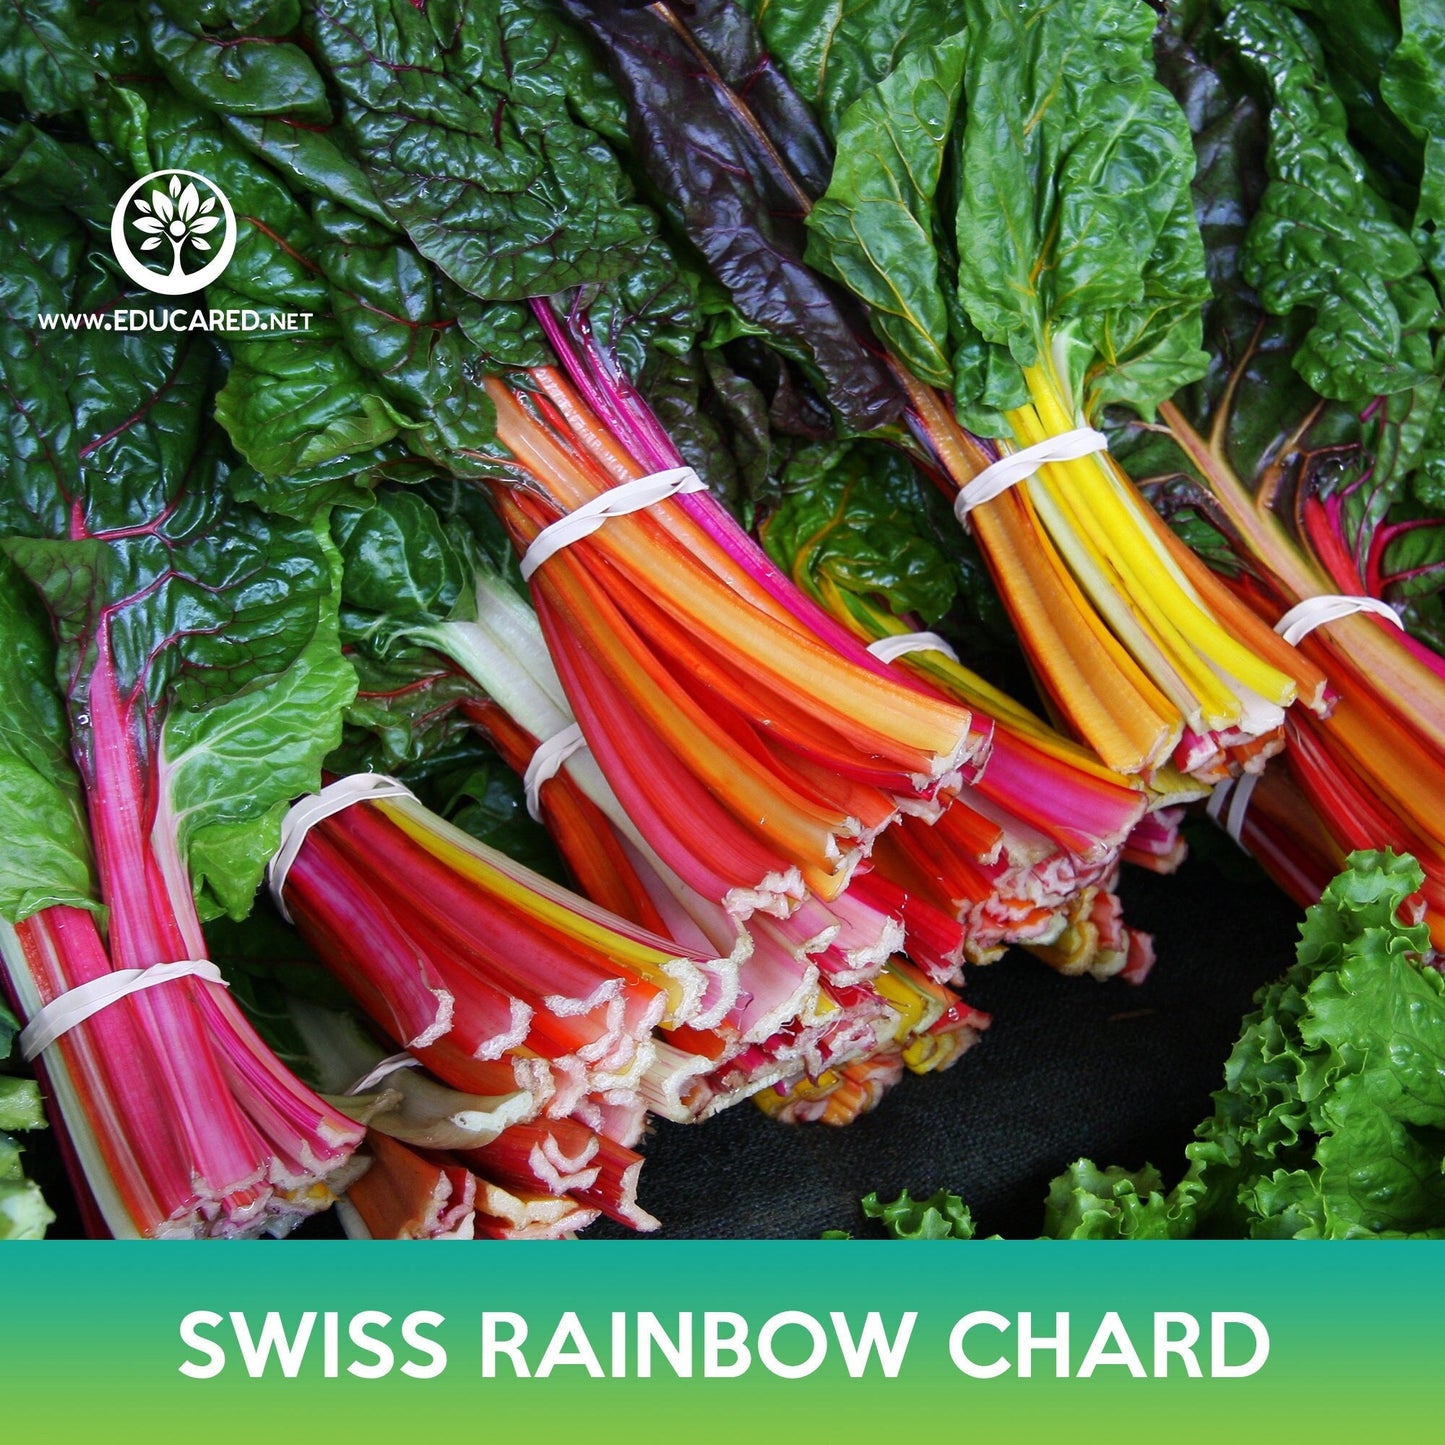 Swiss Rainbow Chard Seeds, Beta vulgaris cicla